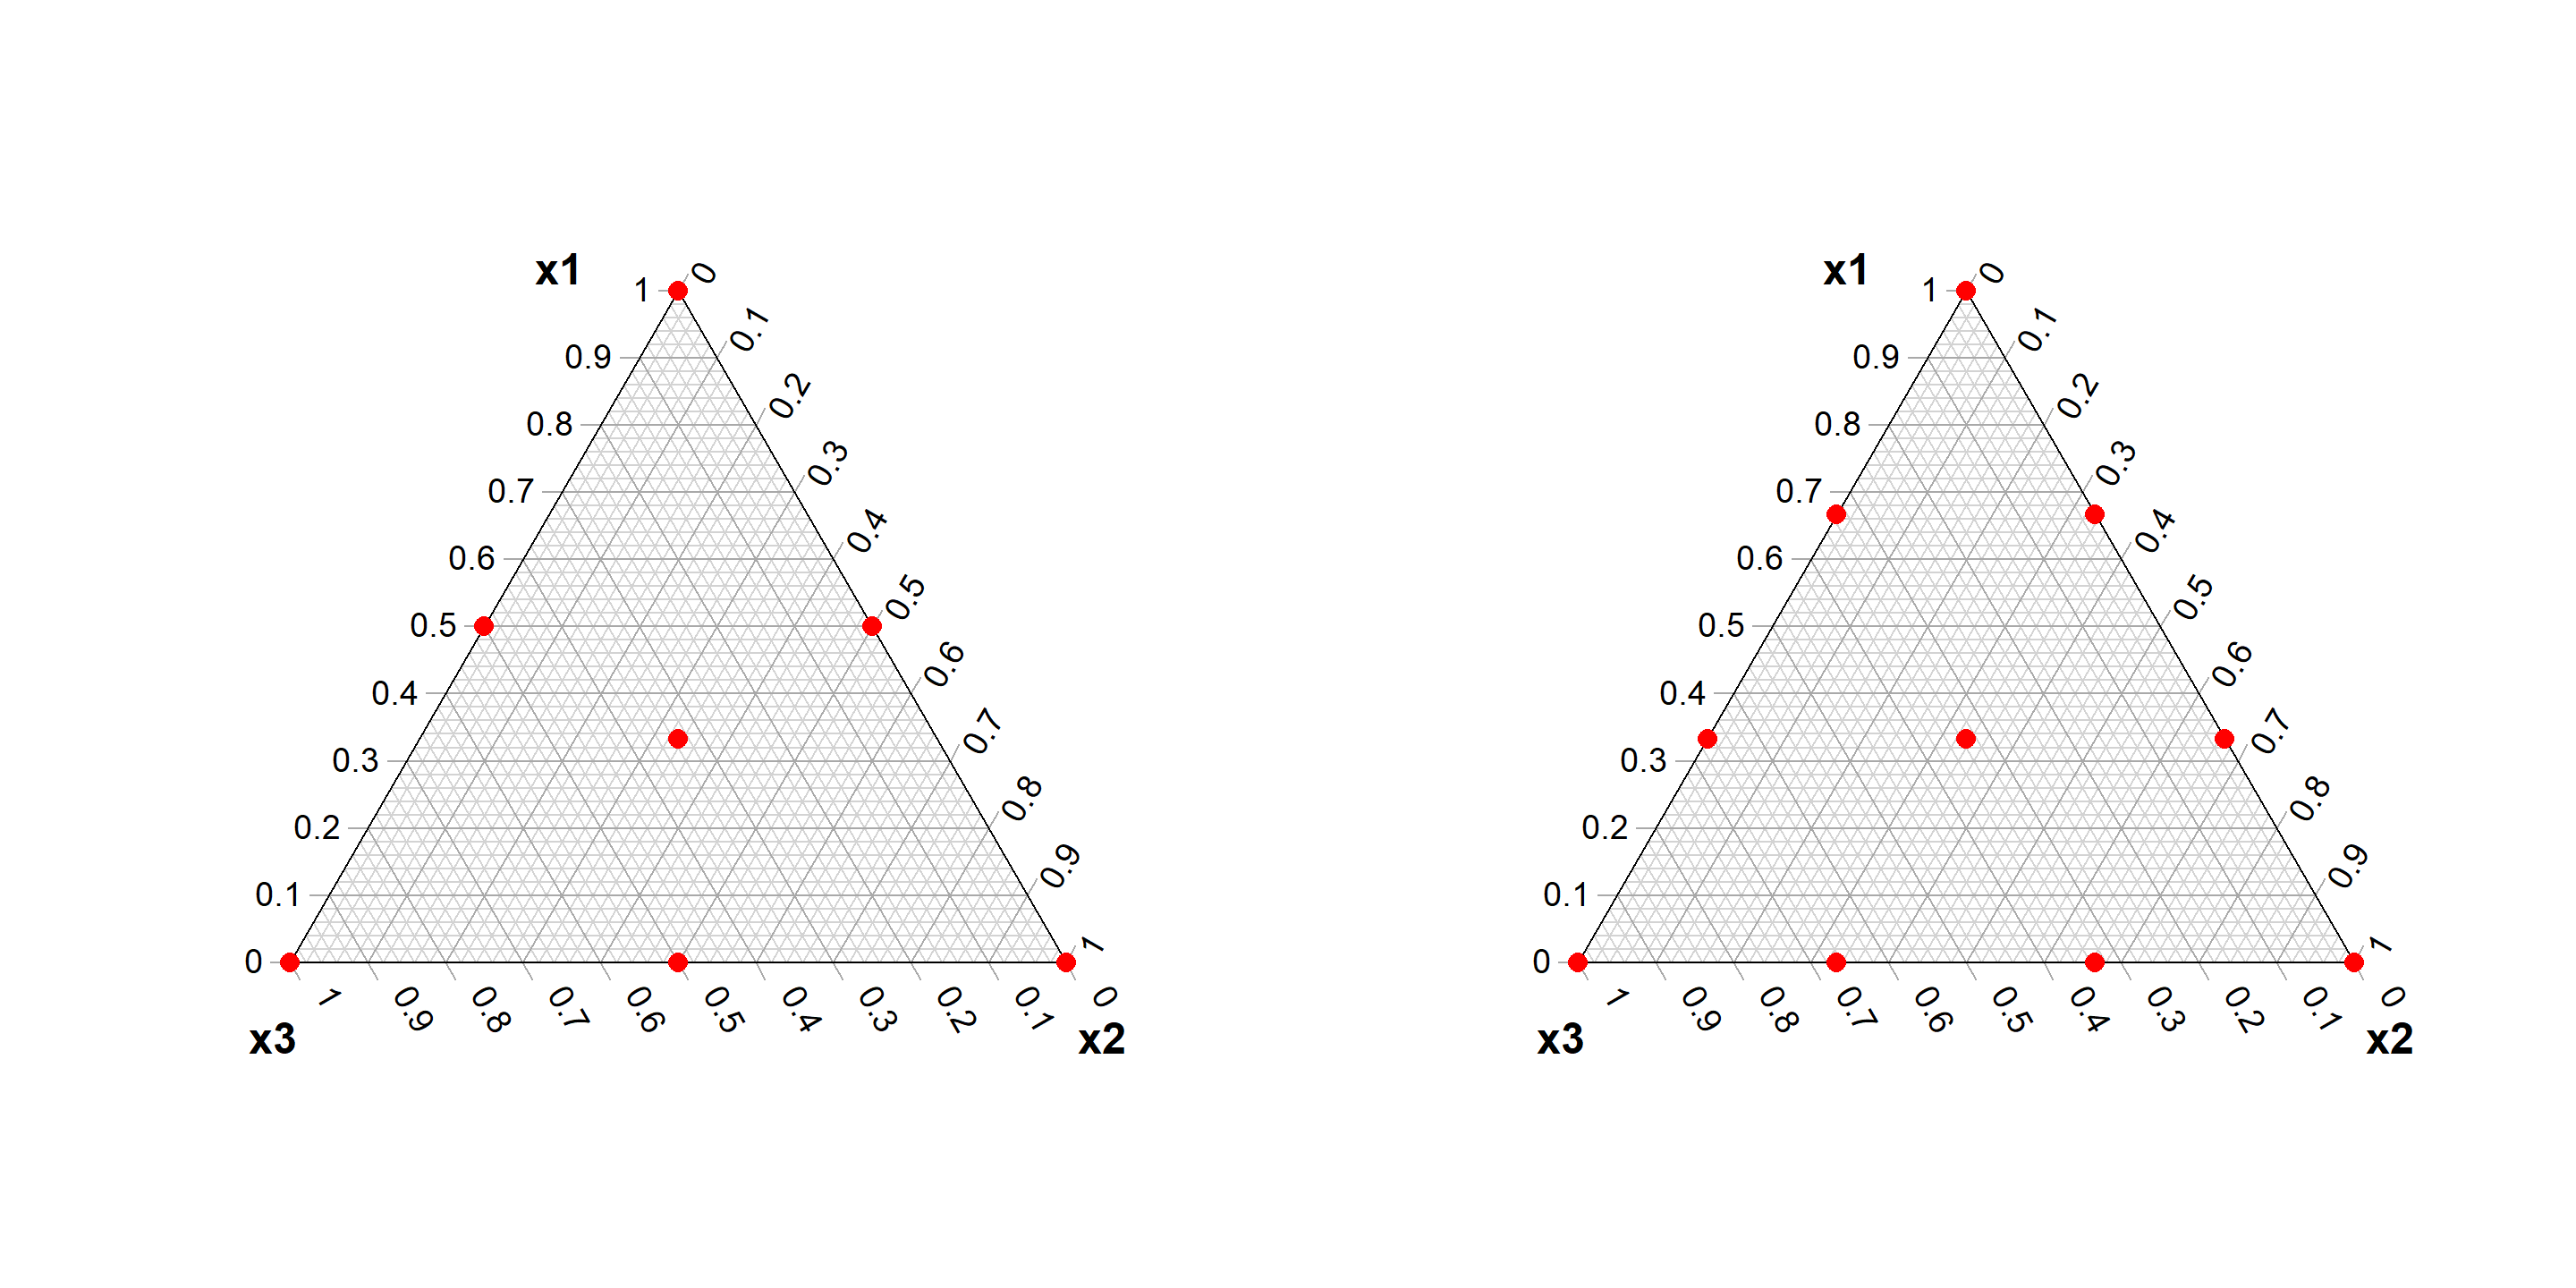 Simplex Centroid Design SCD(3) (left panel) for reduced cubic model and three level Simplex Lattice Design SLD(3,3) (right panel) for the full cubic Scheffe model